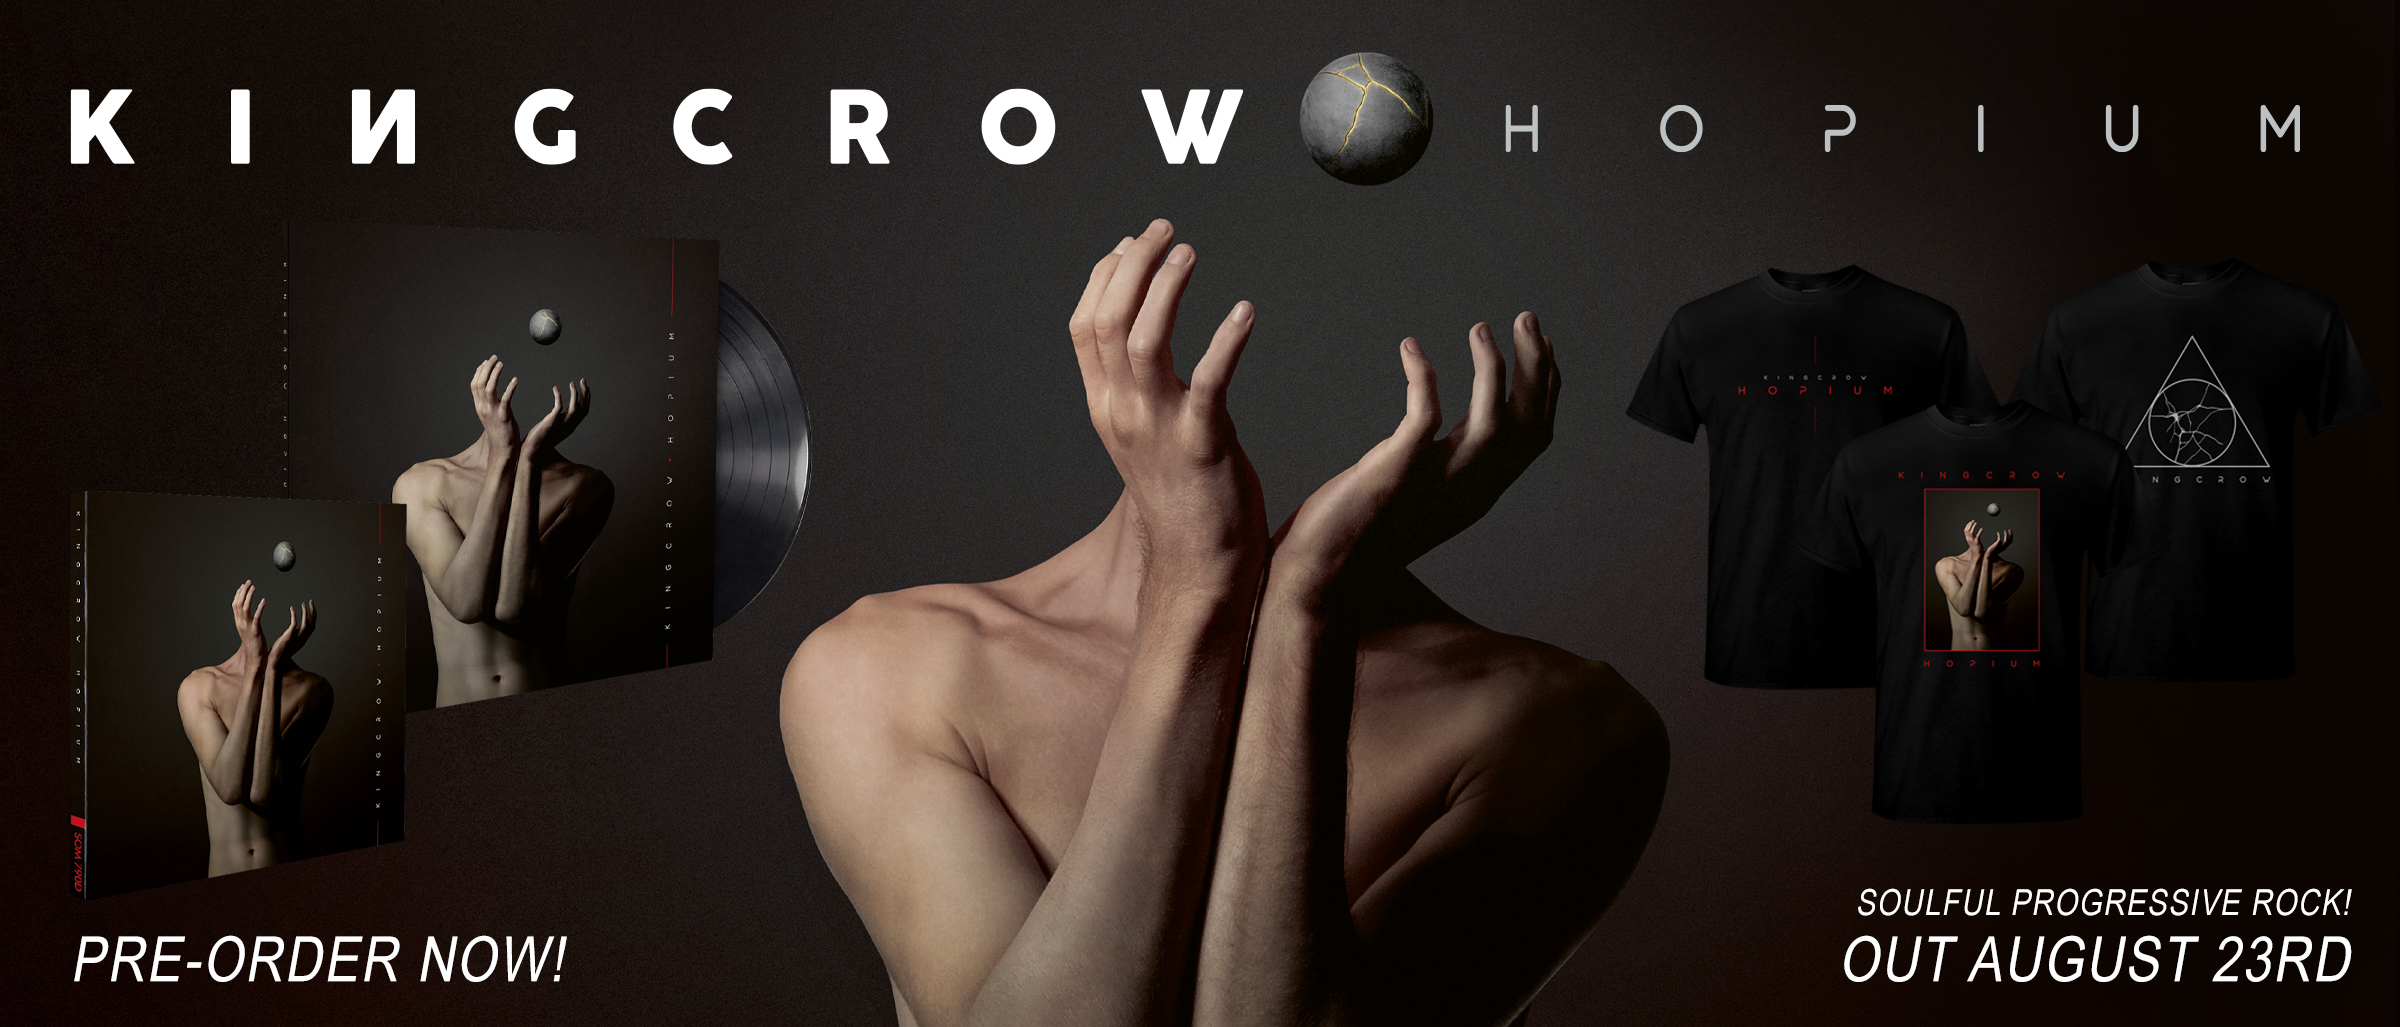 Kingcrow – Hopium